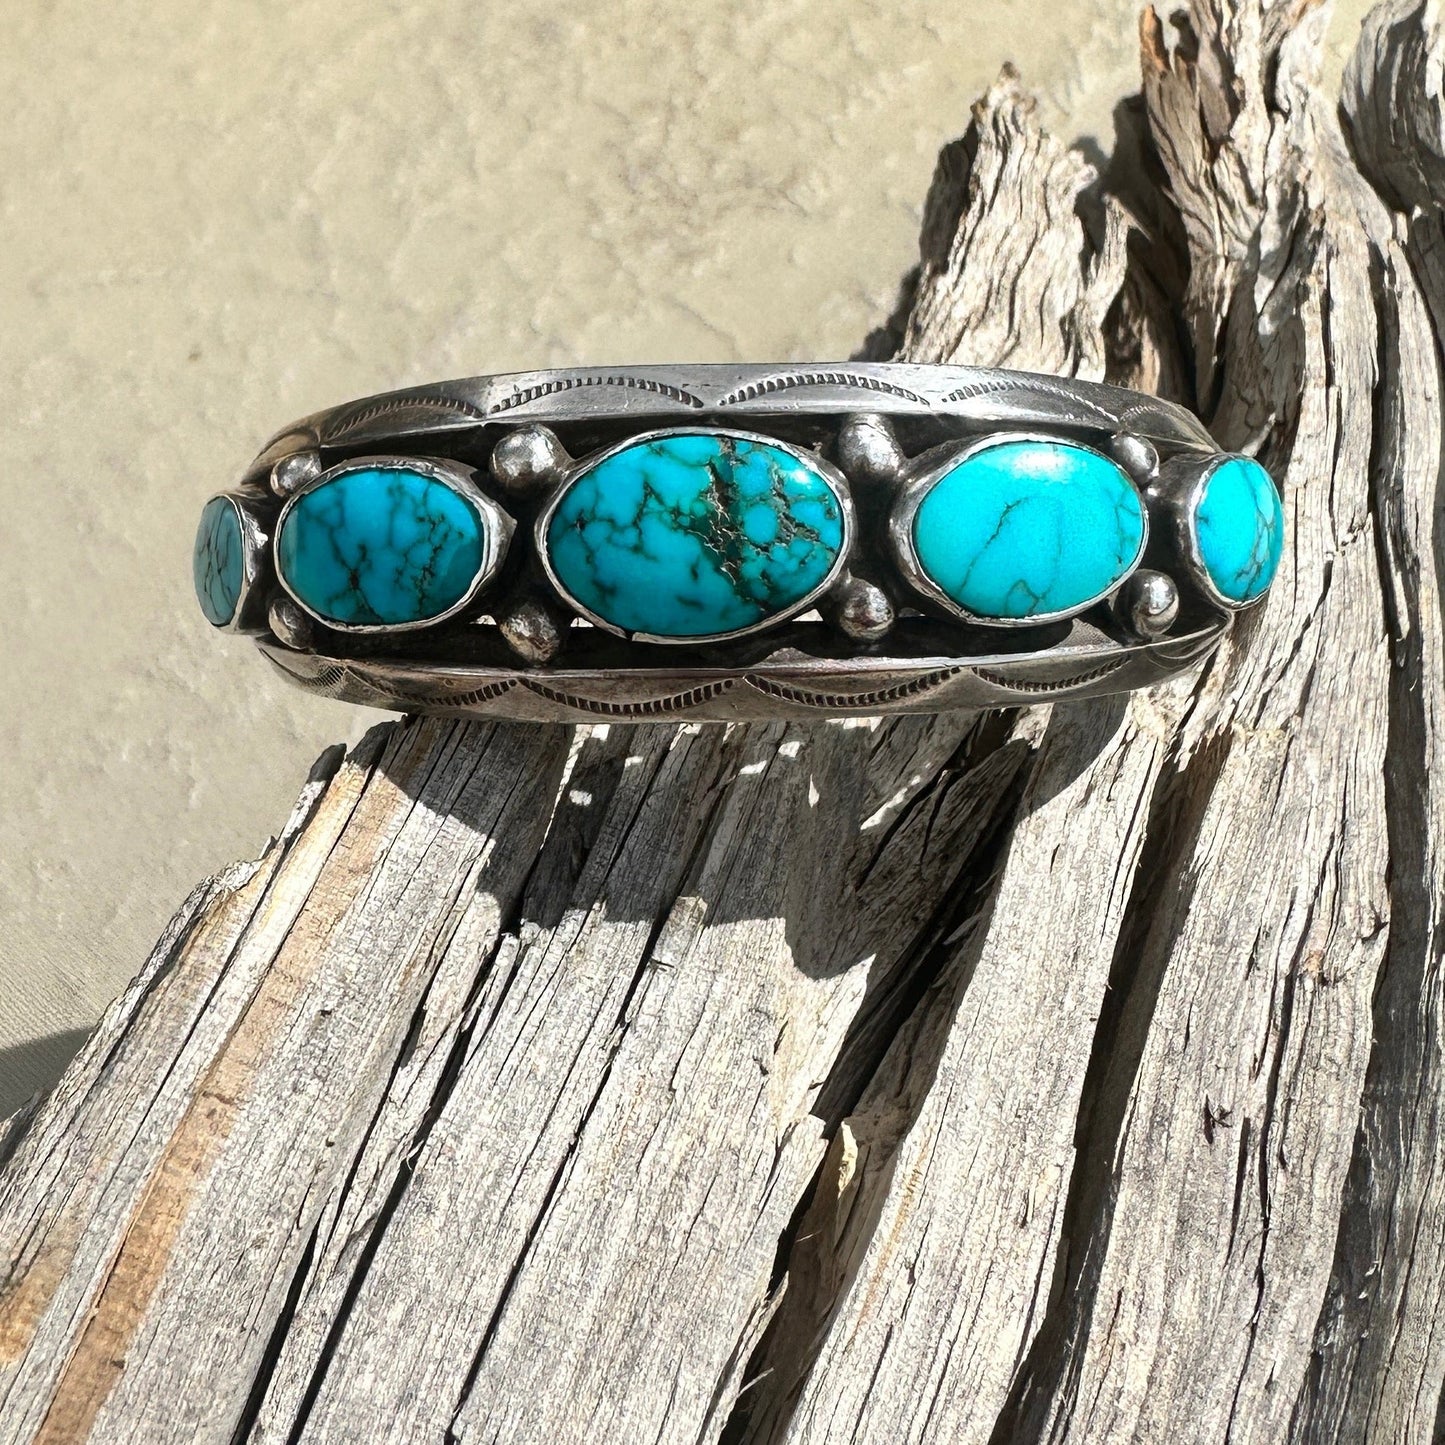 Vintage Classic Navajo Turquoise Row Bracelet - Turquoise & Tufa